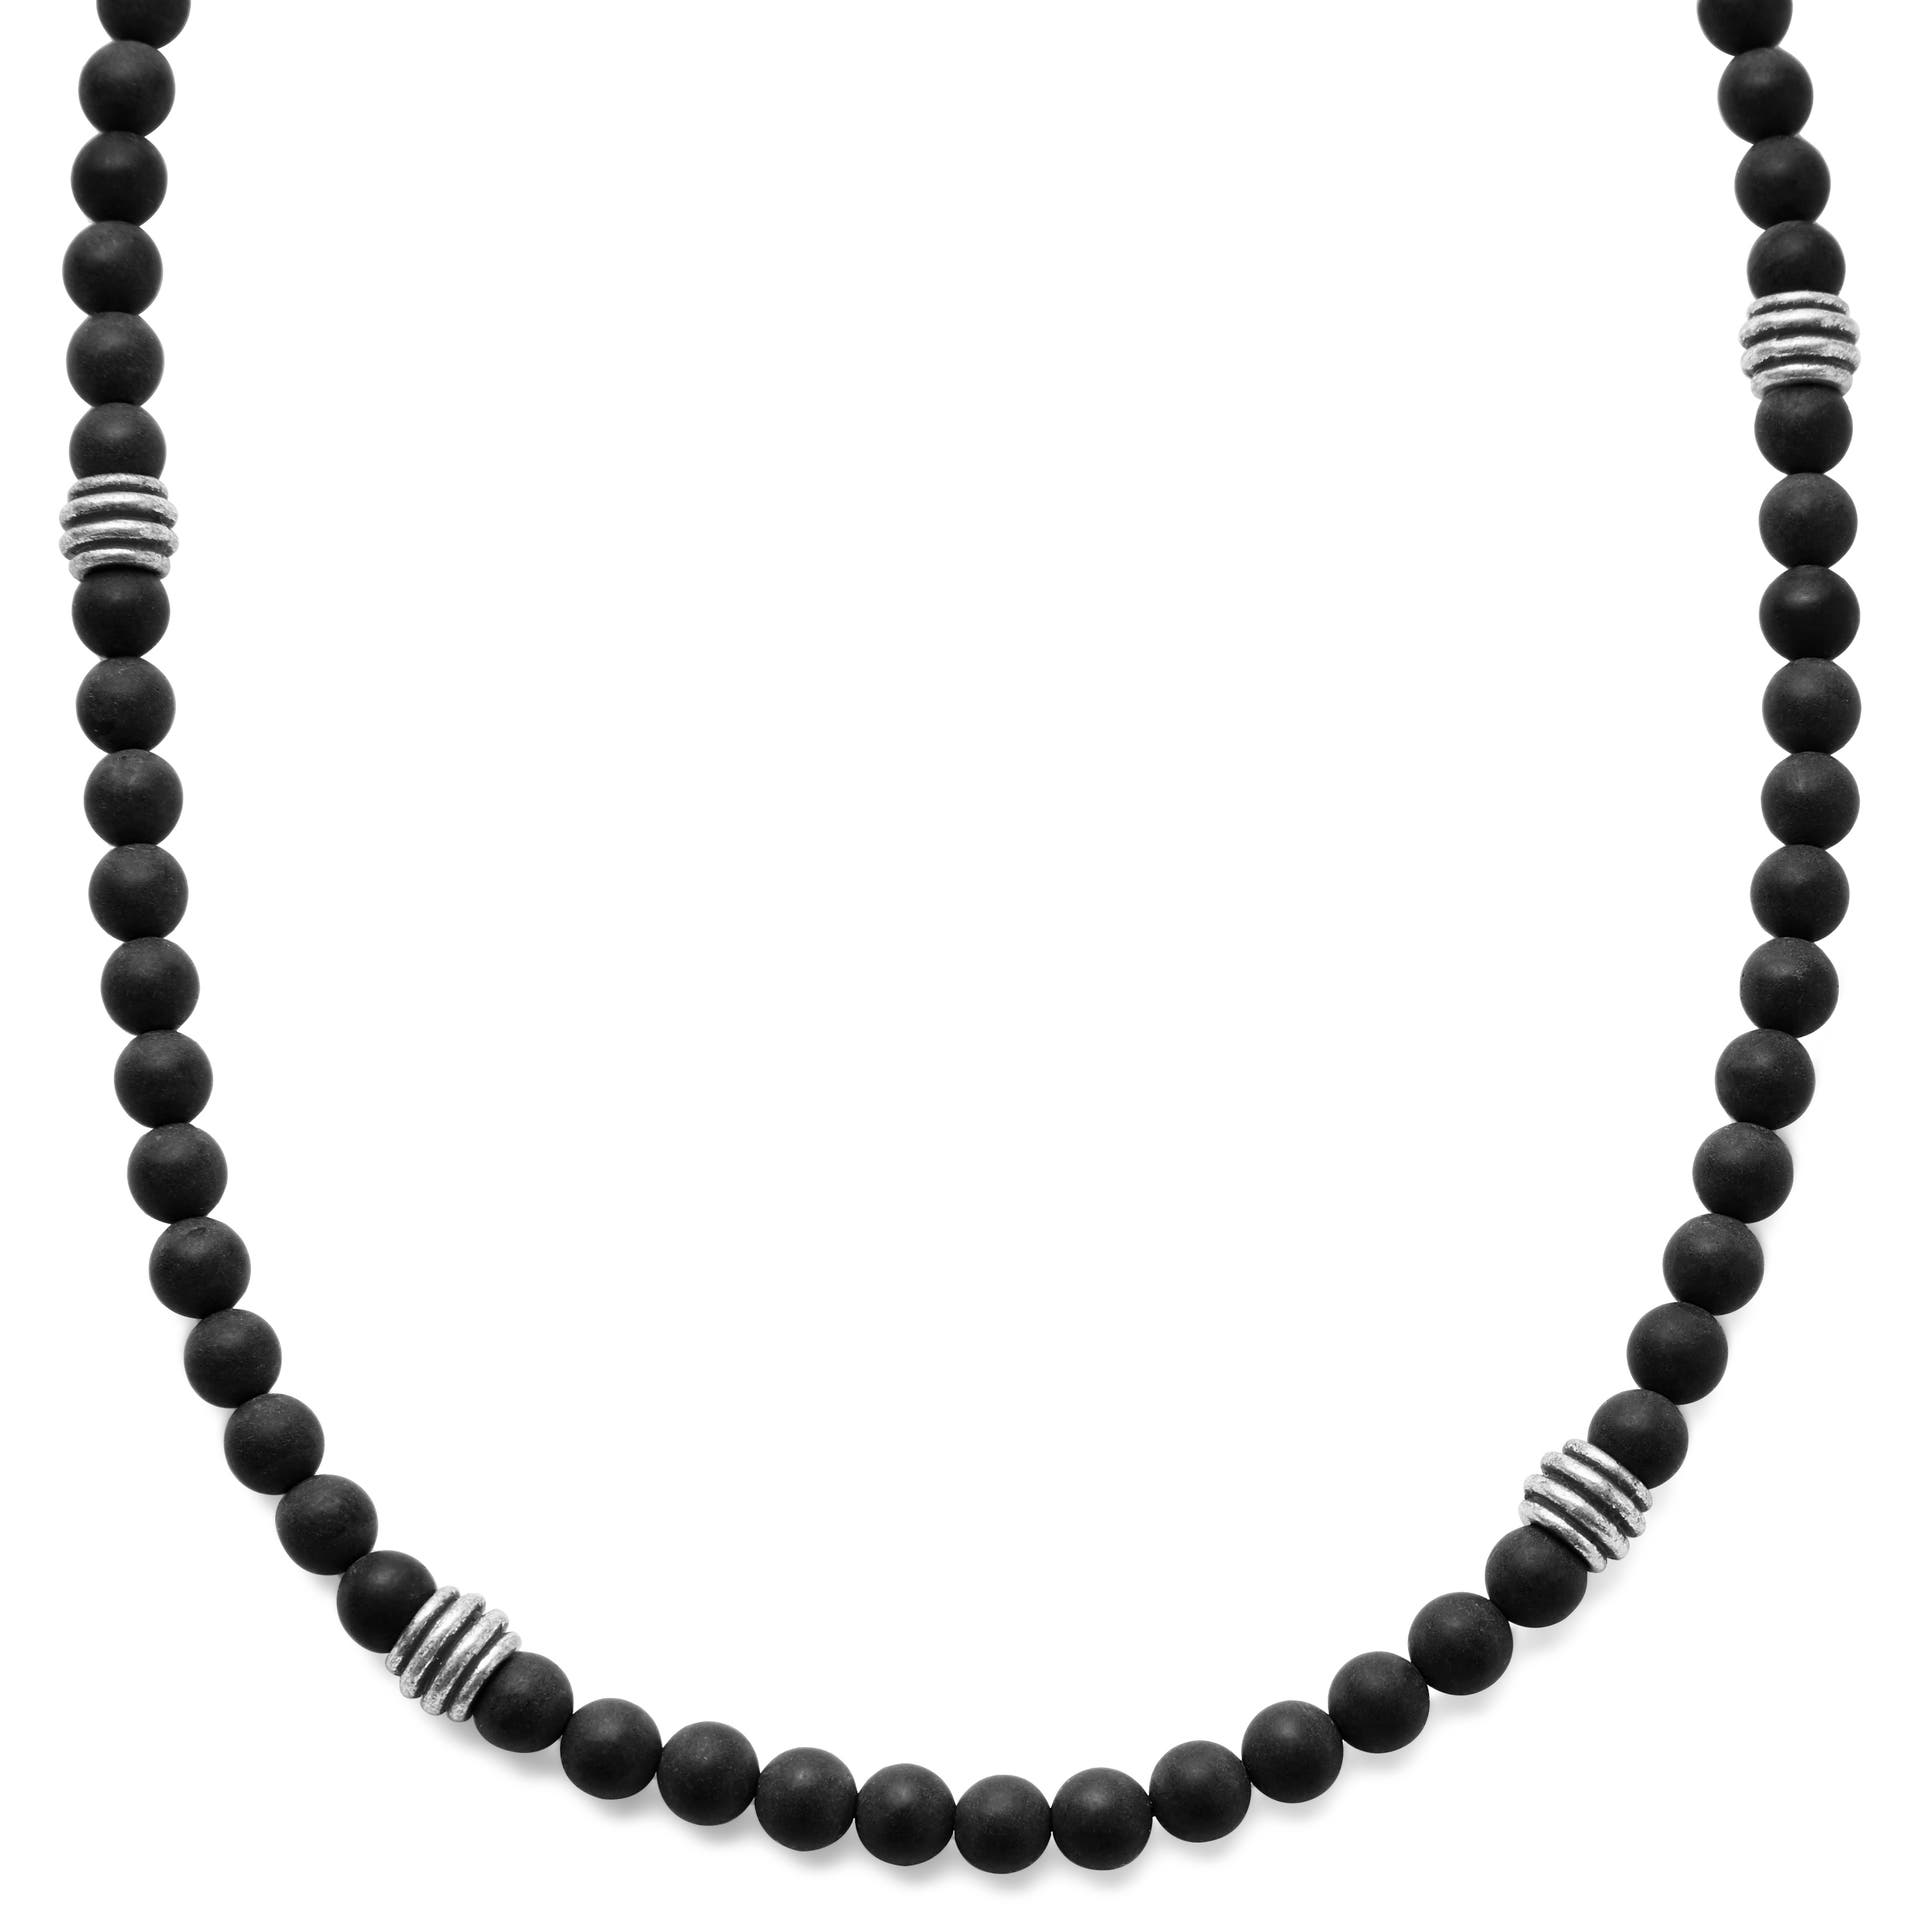 Men's necklaces | 808 Styles for men in stock